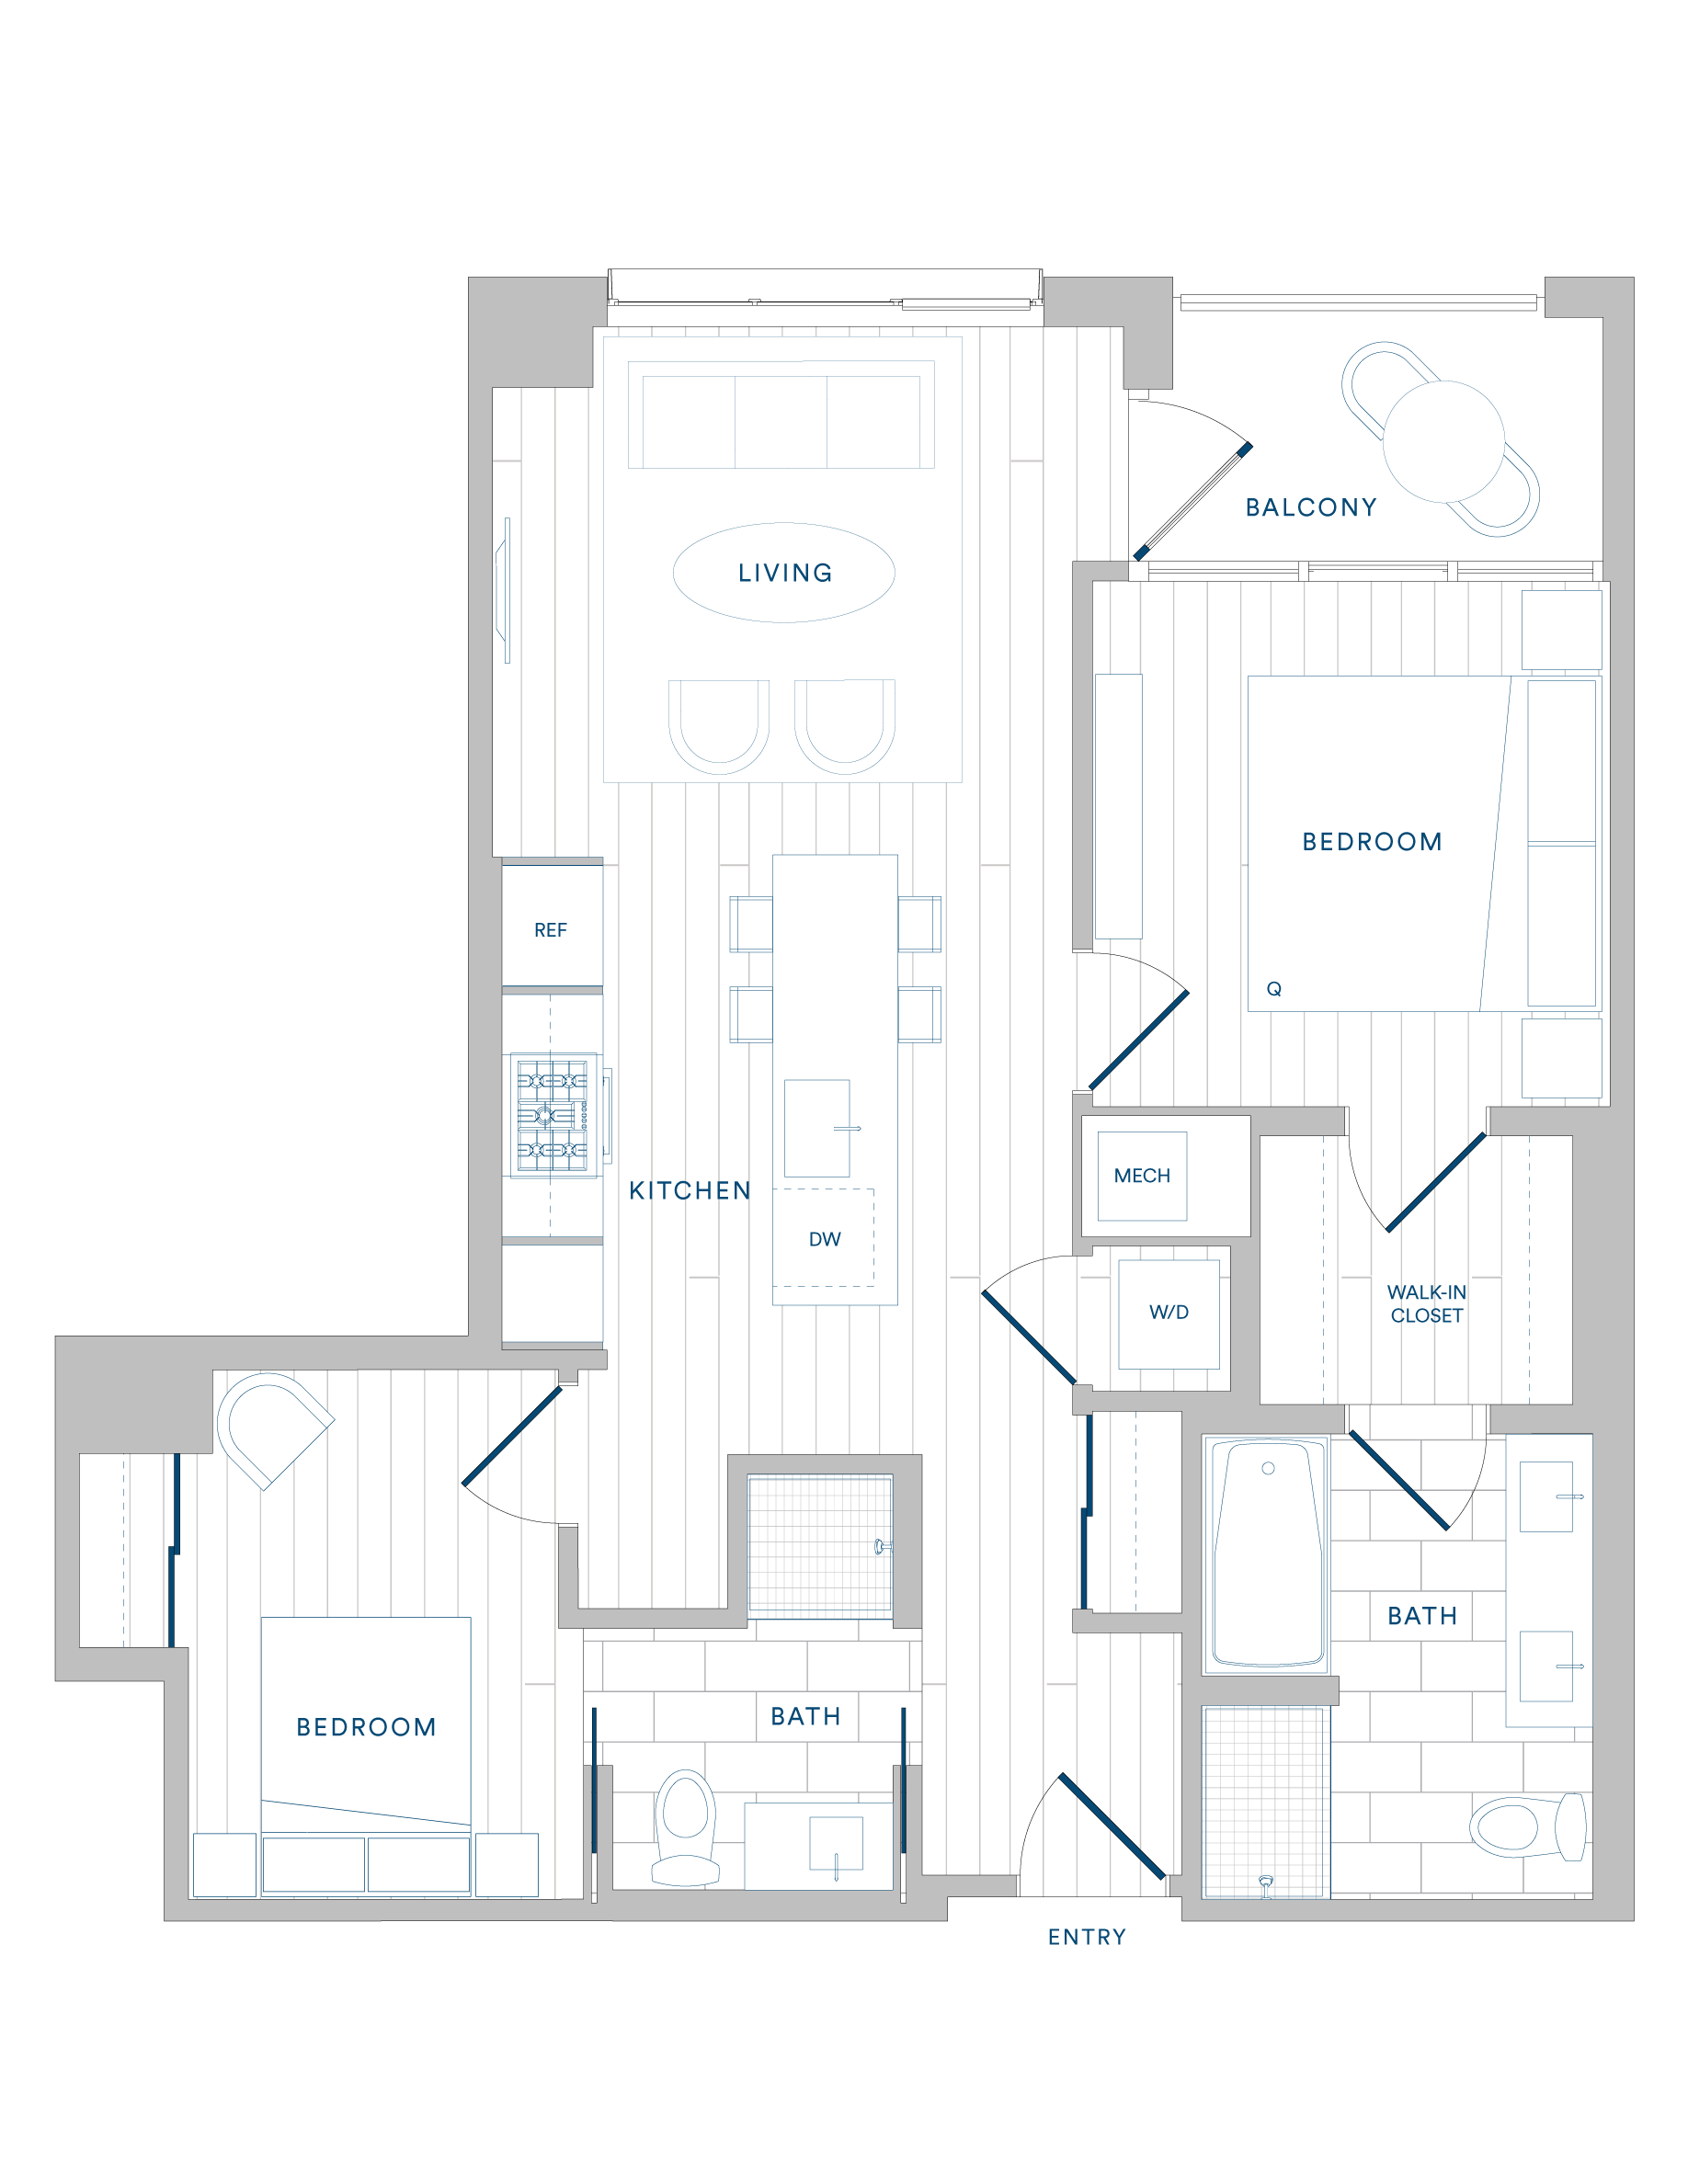 Floorplan for Apartment #312, 2 bedroom unit at Margarite